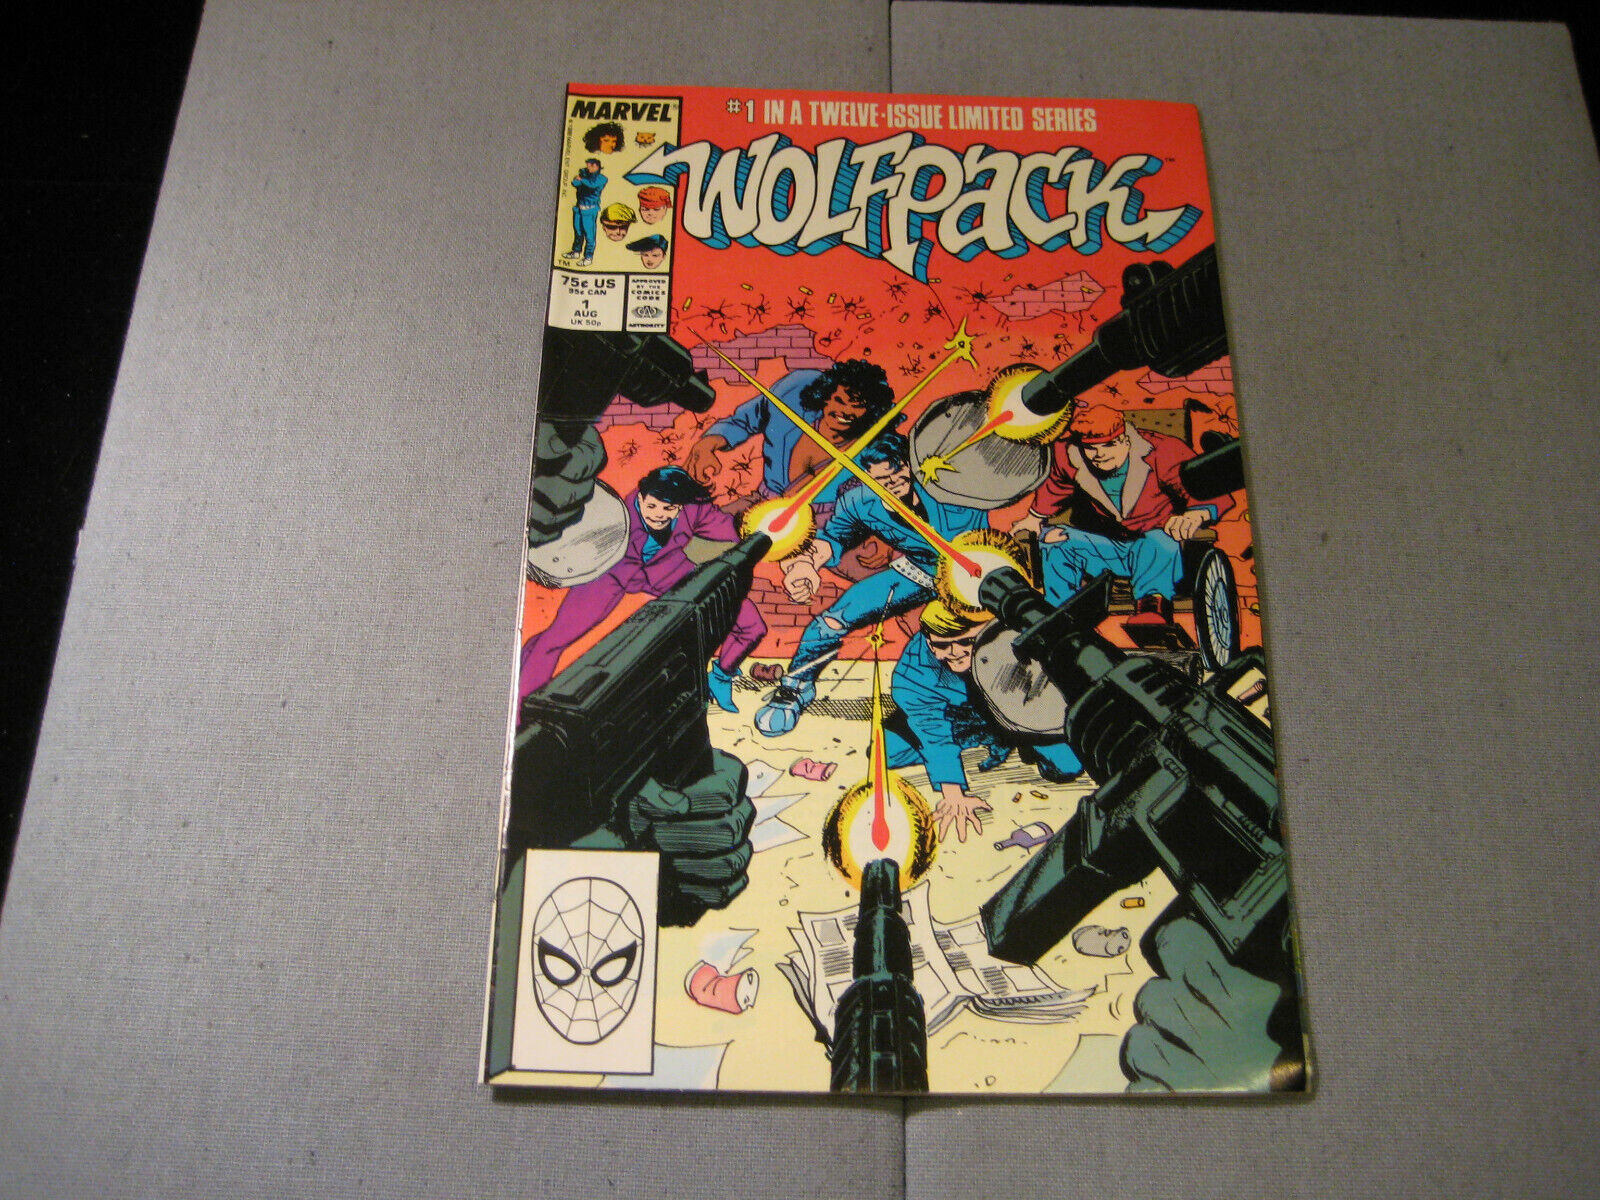 Wolfpack #1 (1988, Marvel Comics)